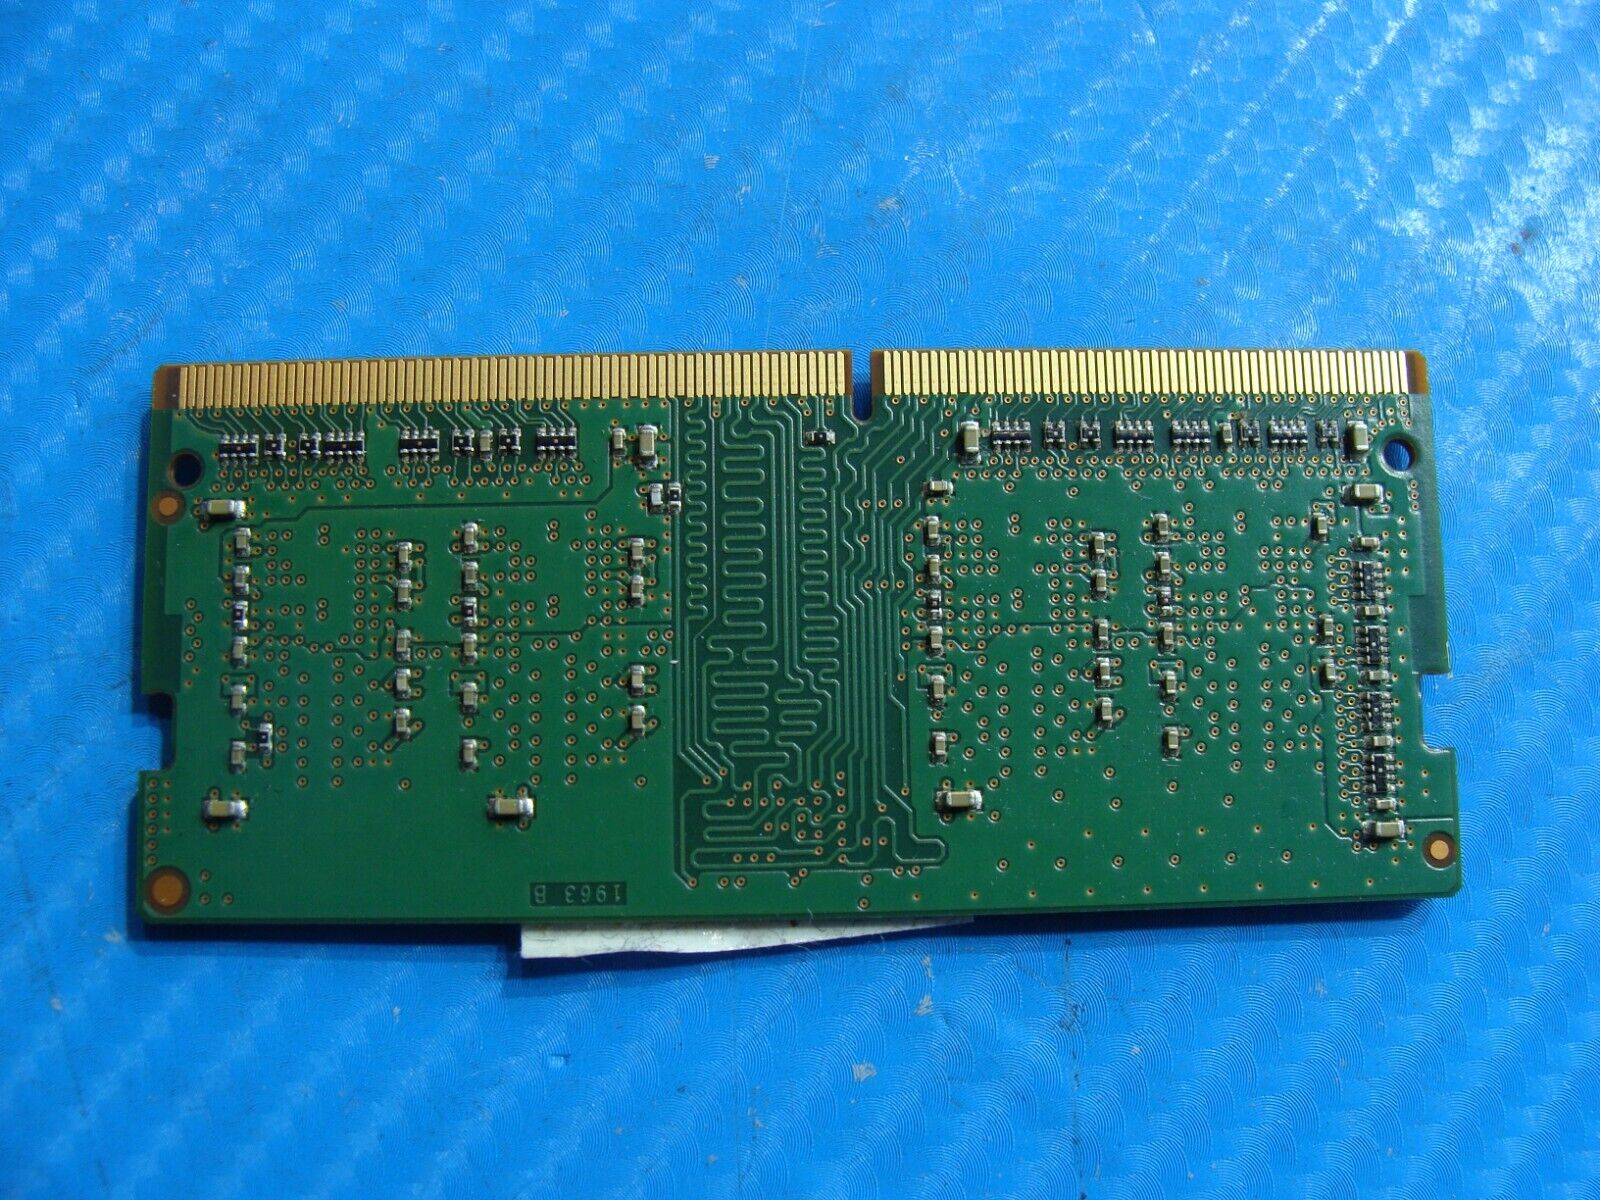 Acer F5-573G Micron 4GB 1Rx16 PC4-2400T Memory RAM SO-DIMM MTA4ATF51264HZ-2G3B1